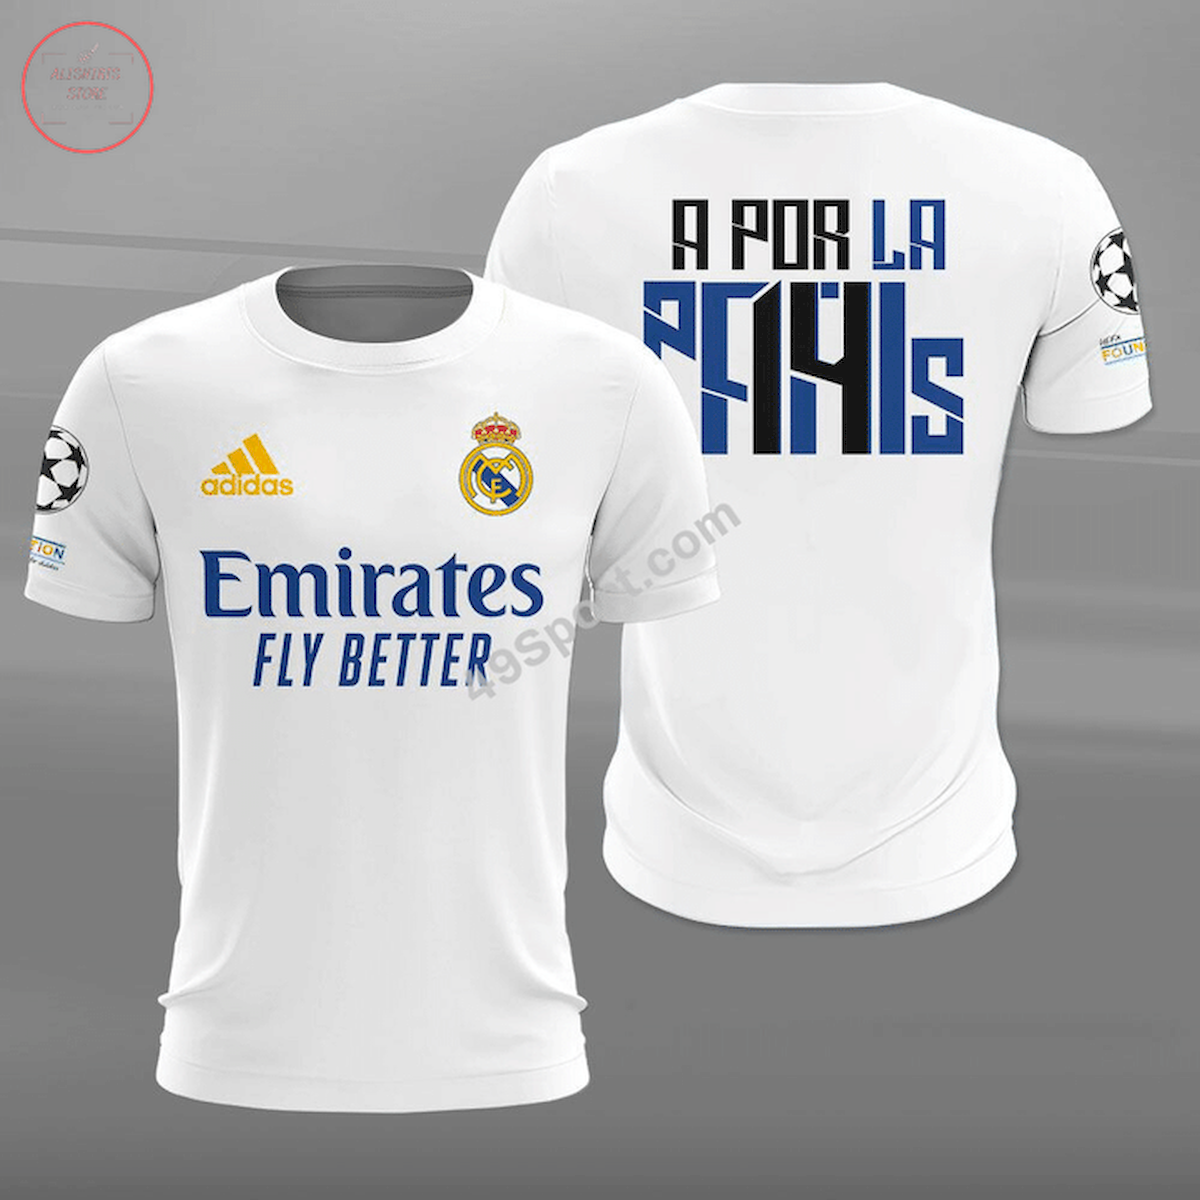 Real Madrid A Por La 14 All Over Printed Shirt